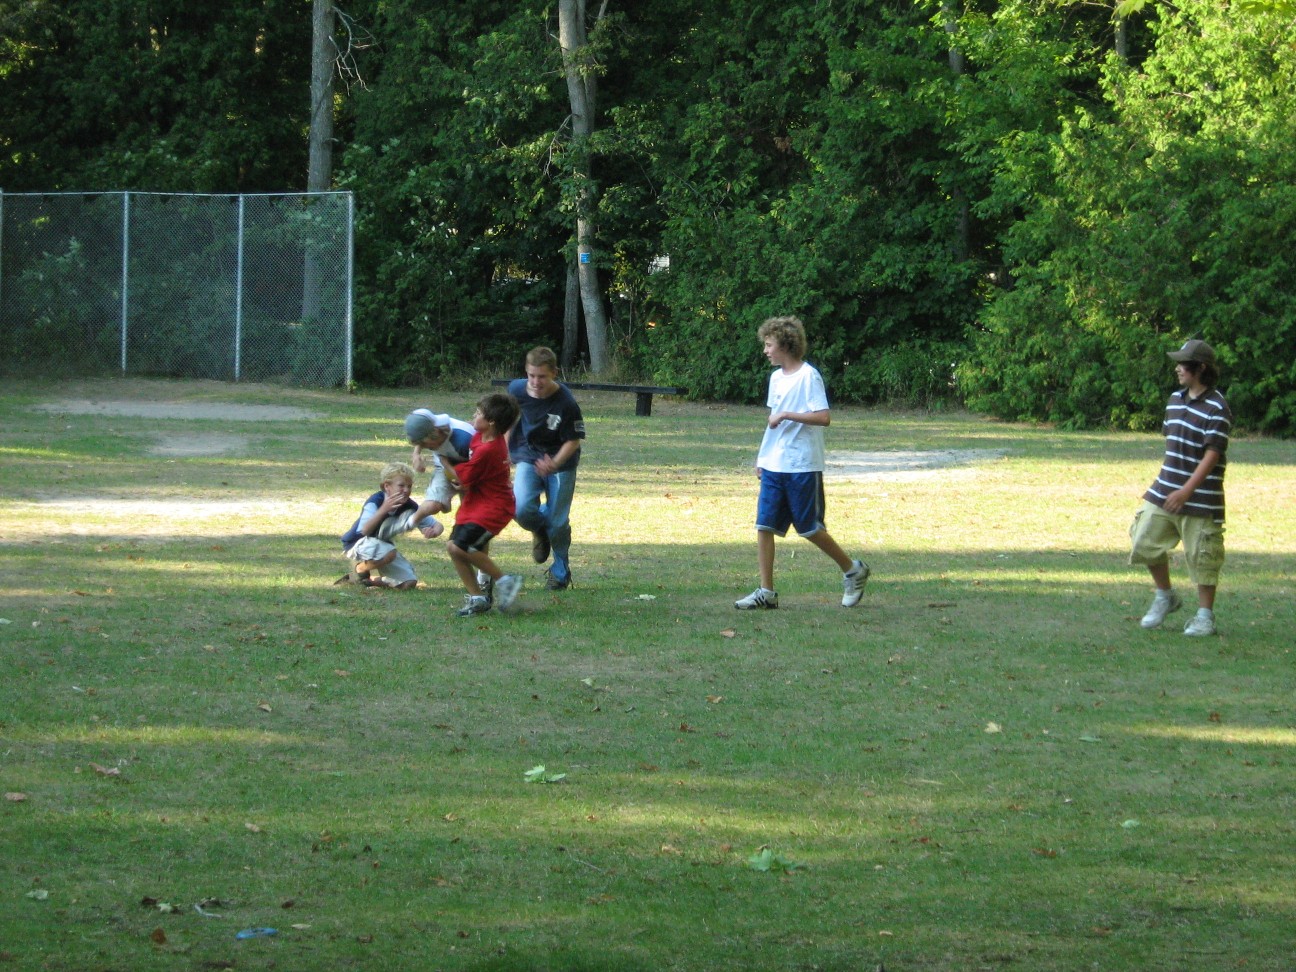 FileHarrisville State Park Backyard Footballjpg Wikimedia Commons